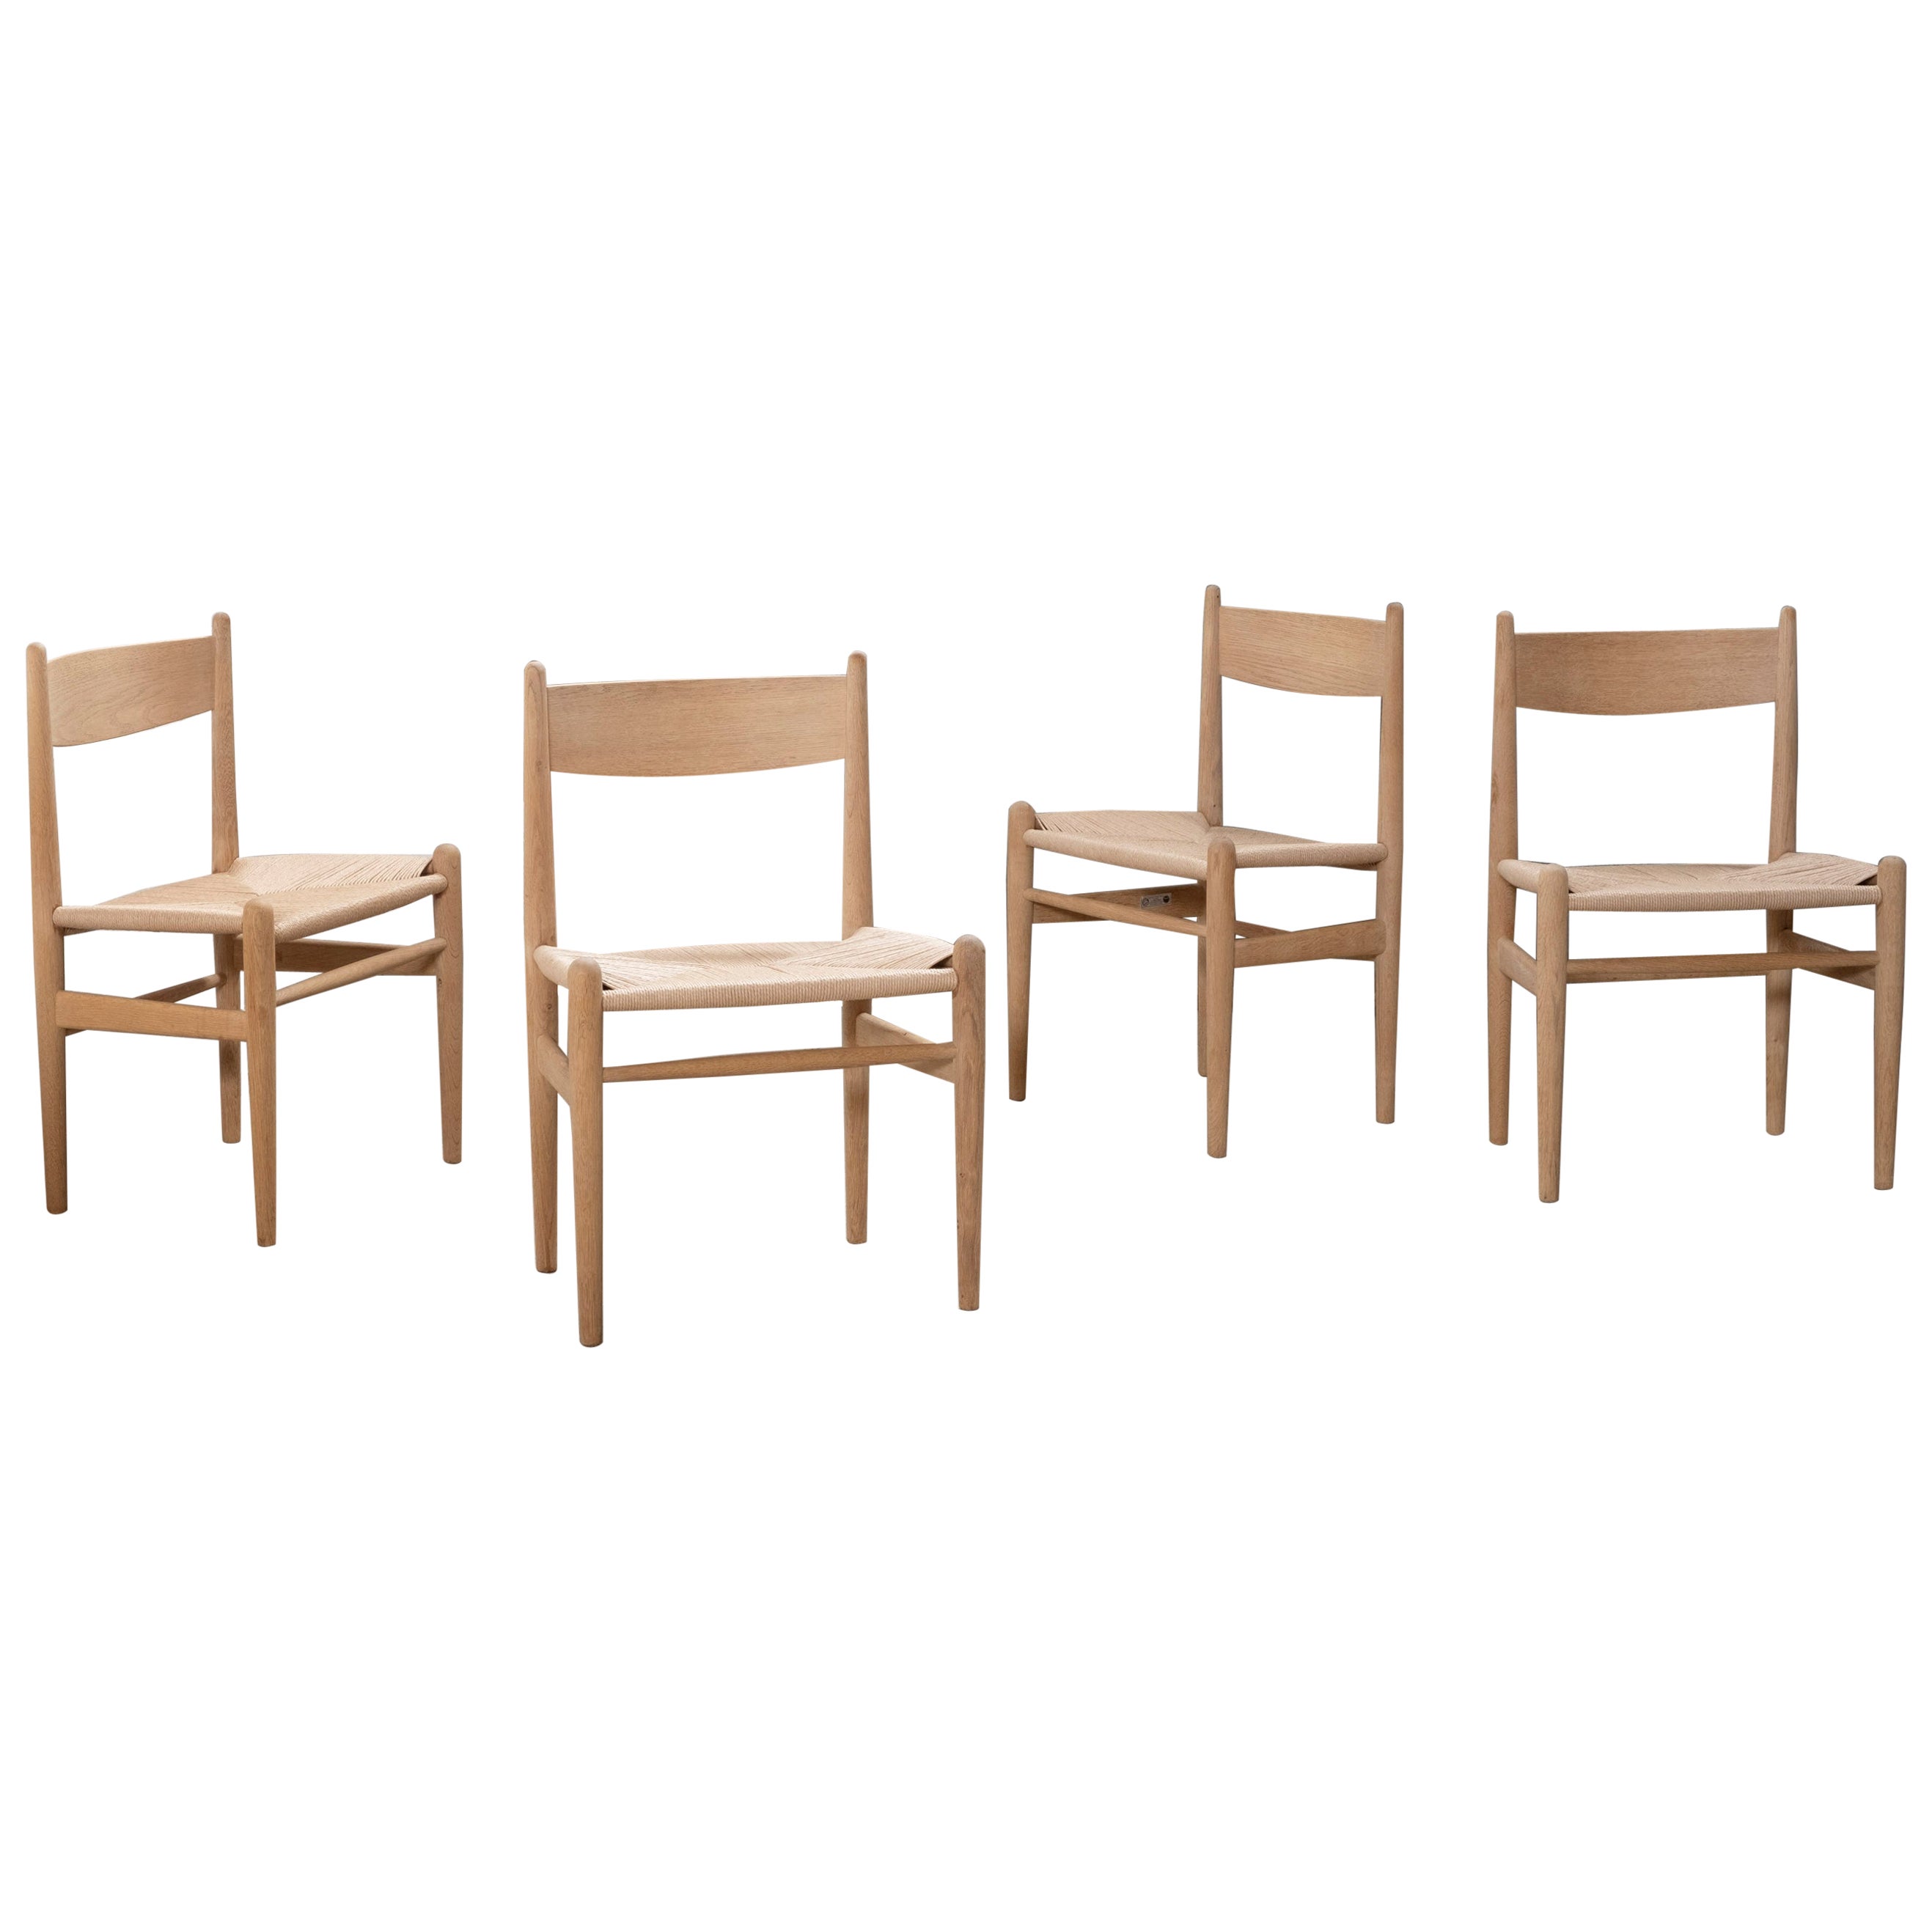 Hans J. Wegner CH 36 Dining Chairs in Oak, Set of 4